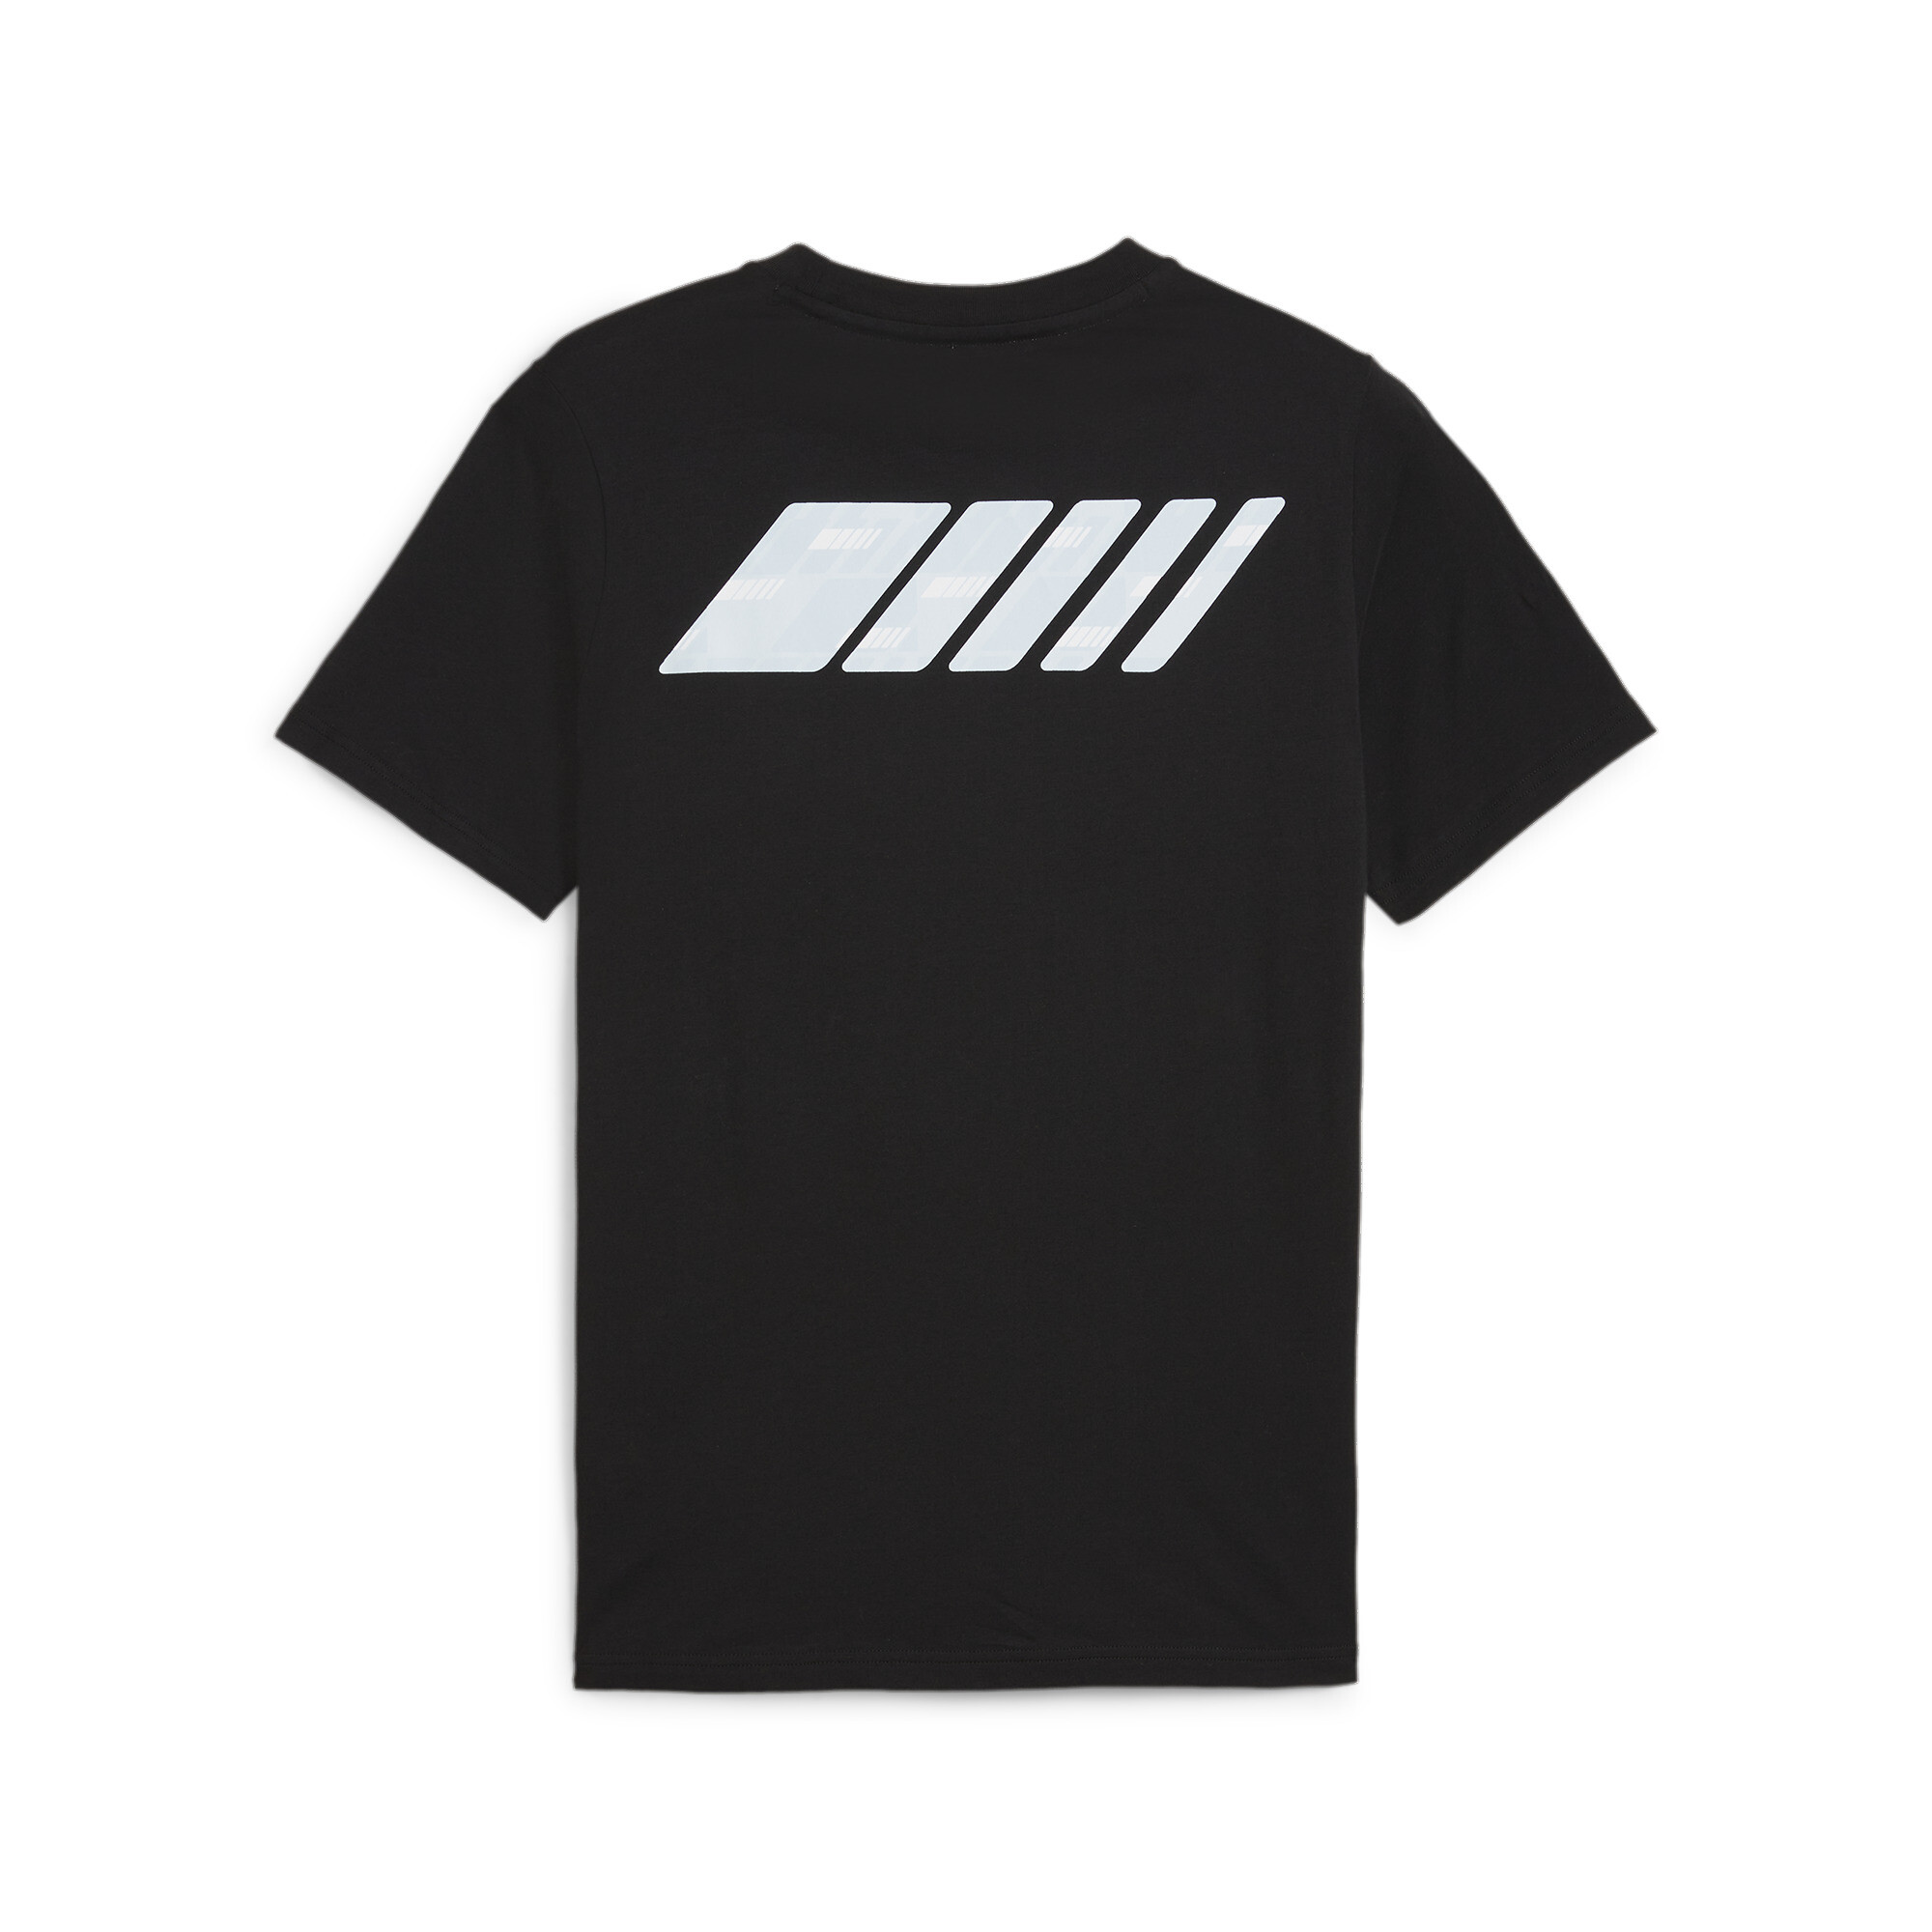 Men's Puma AMG Motorsports Graphic T-Shirt, Black, Size XXL, Clothing